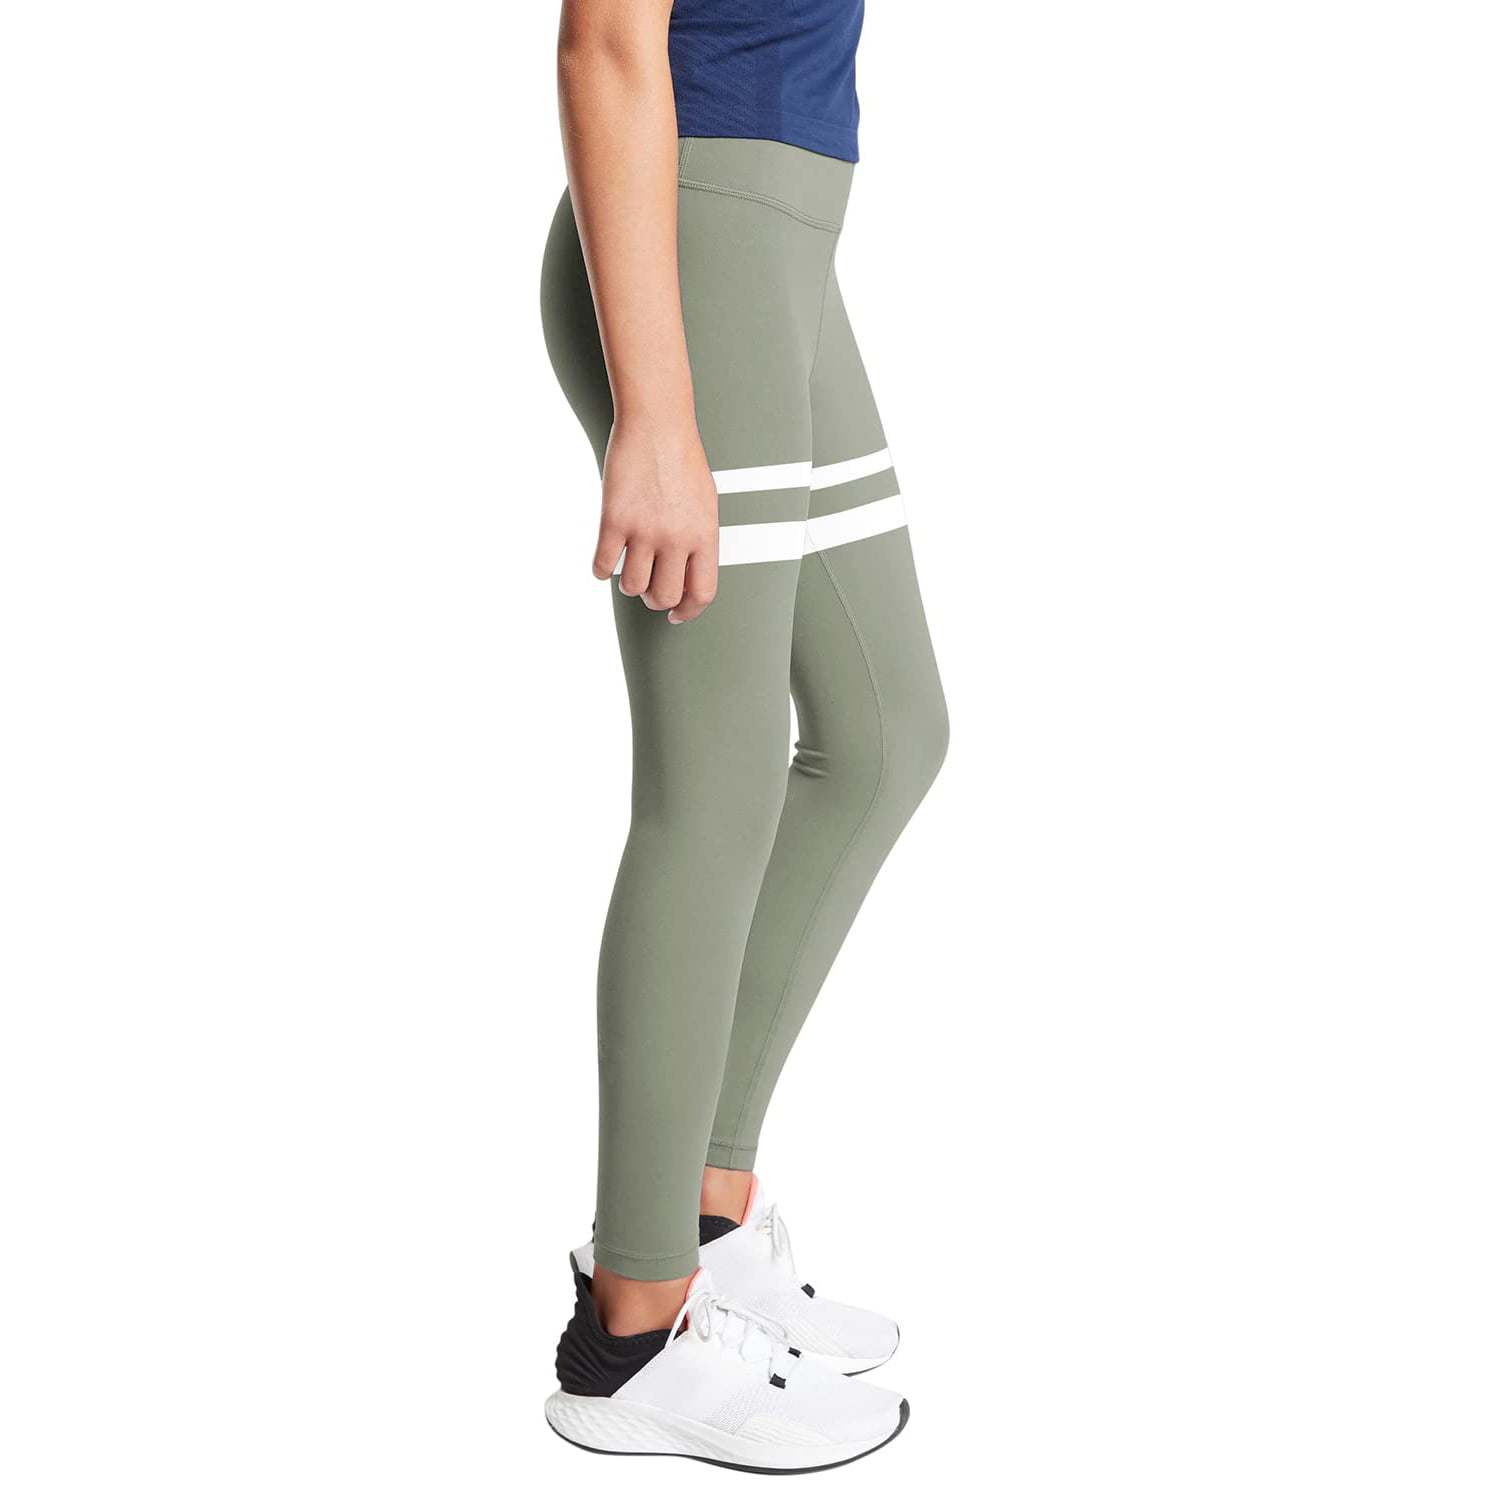 Discover 244+ cotton sports leggings